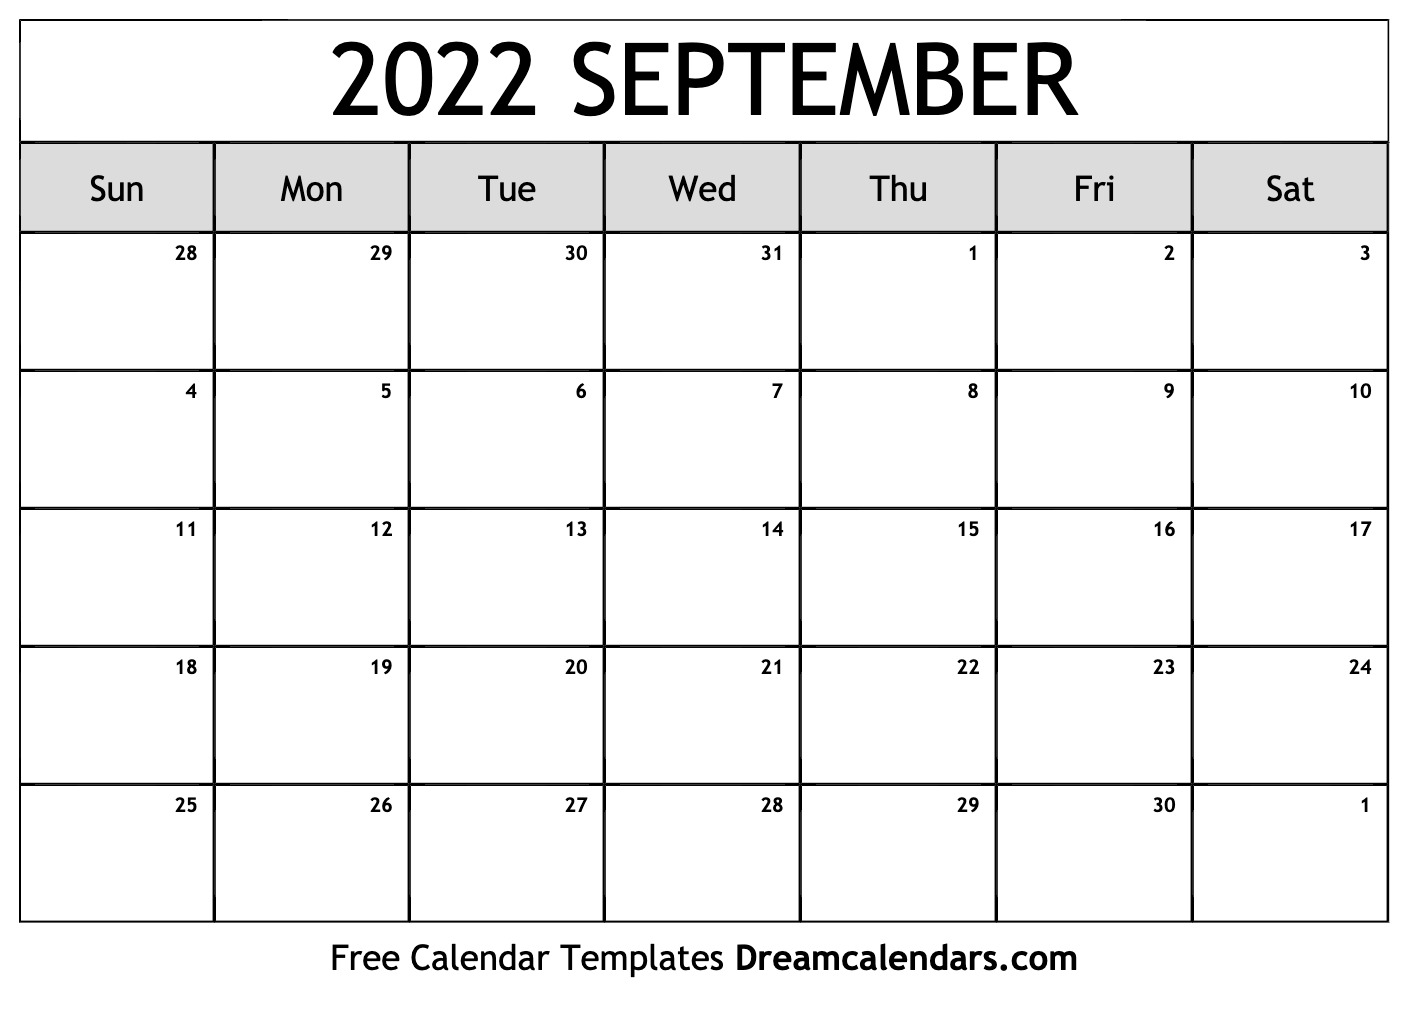 September 2022 Free Printable Calendar Download Printable September 2022 Calendars